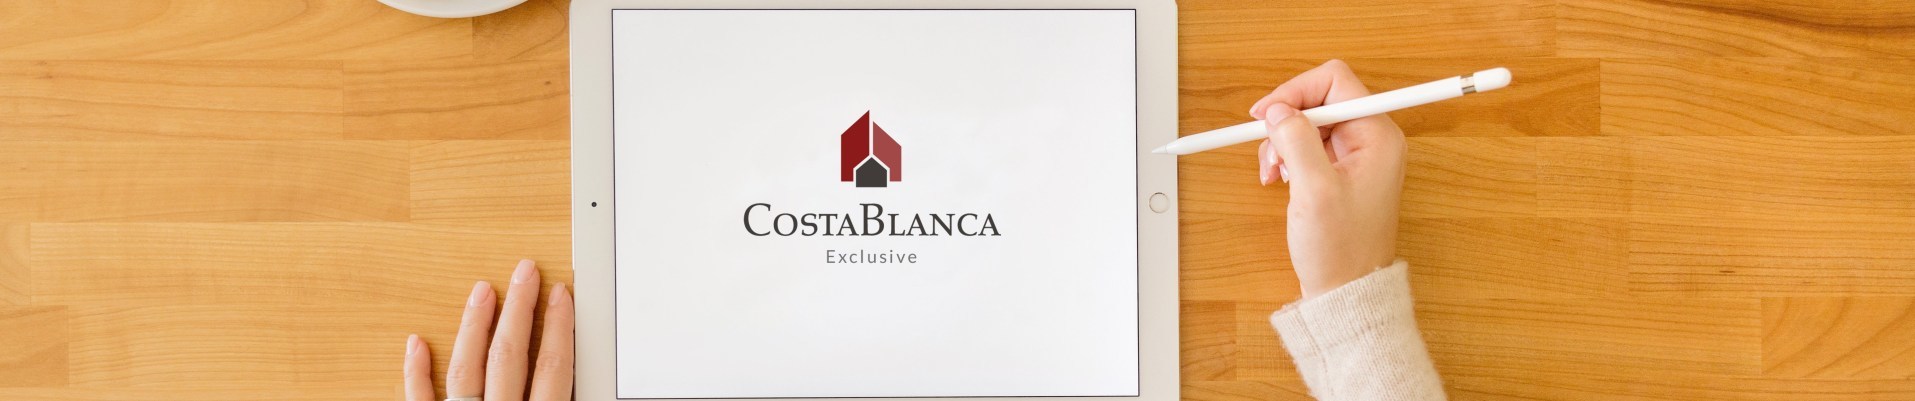 CostaBlanca Exclusive